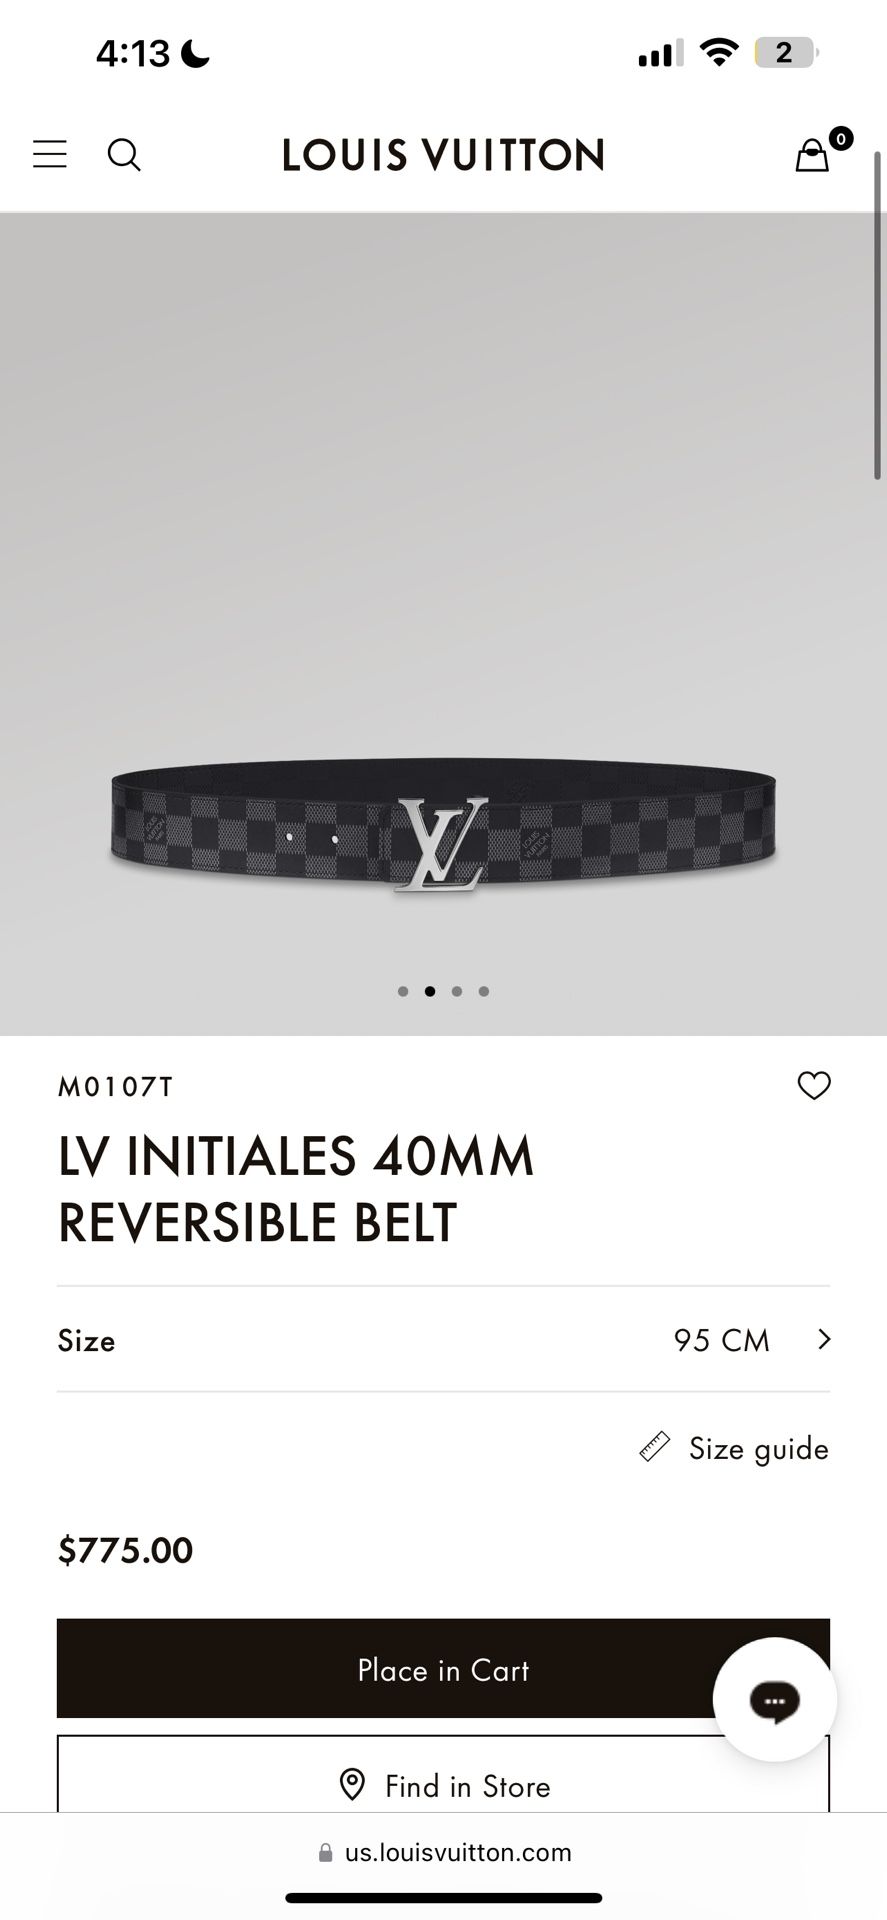 LV initials 40mm Reversible Belt